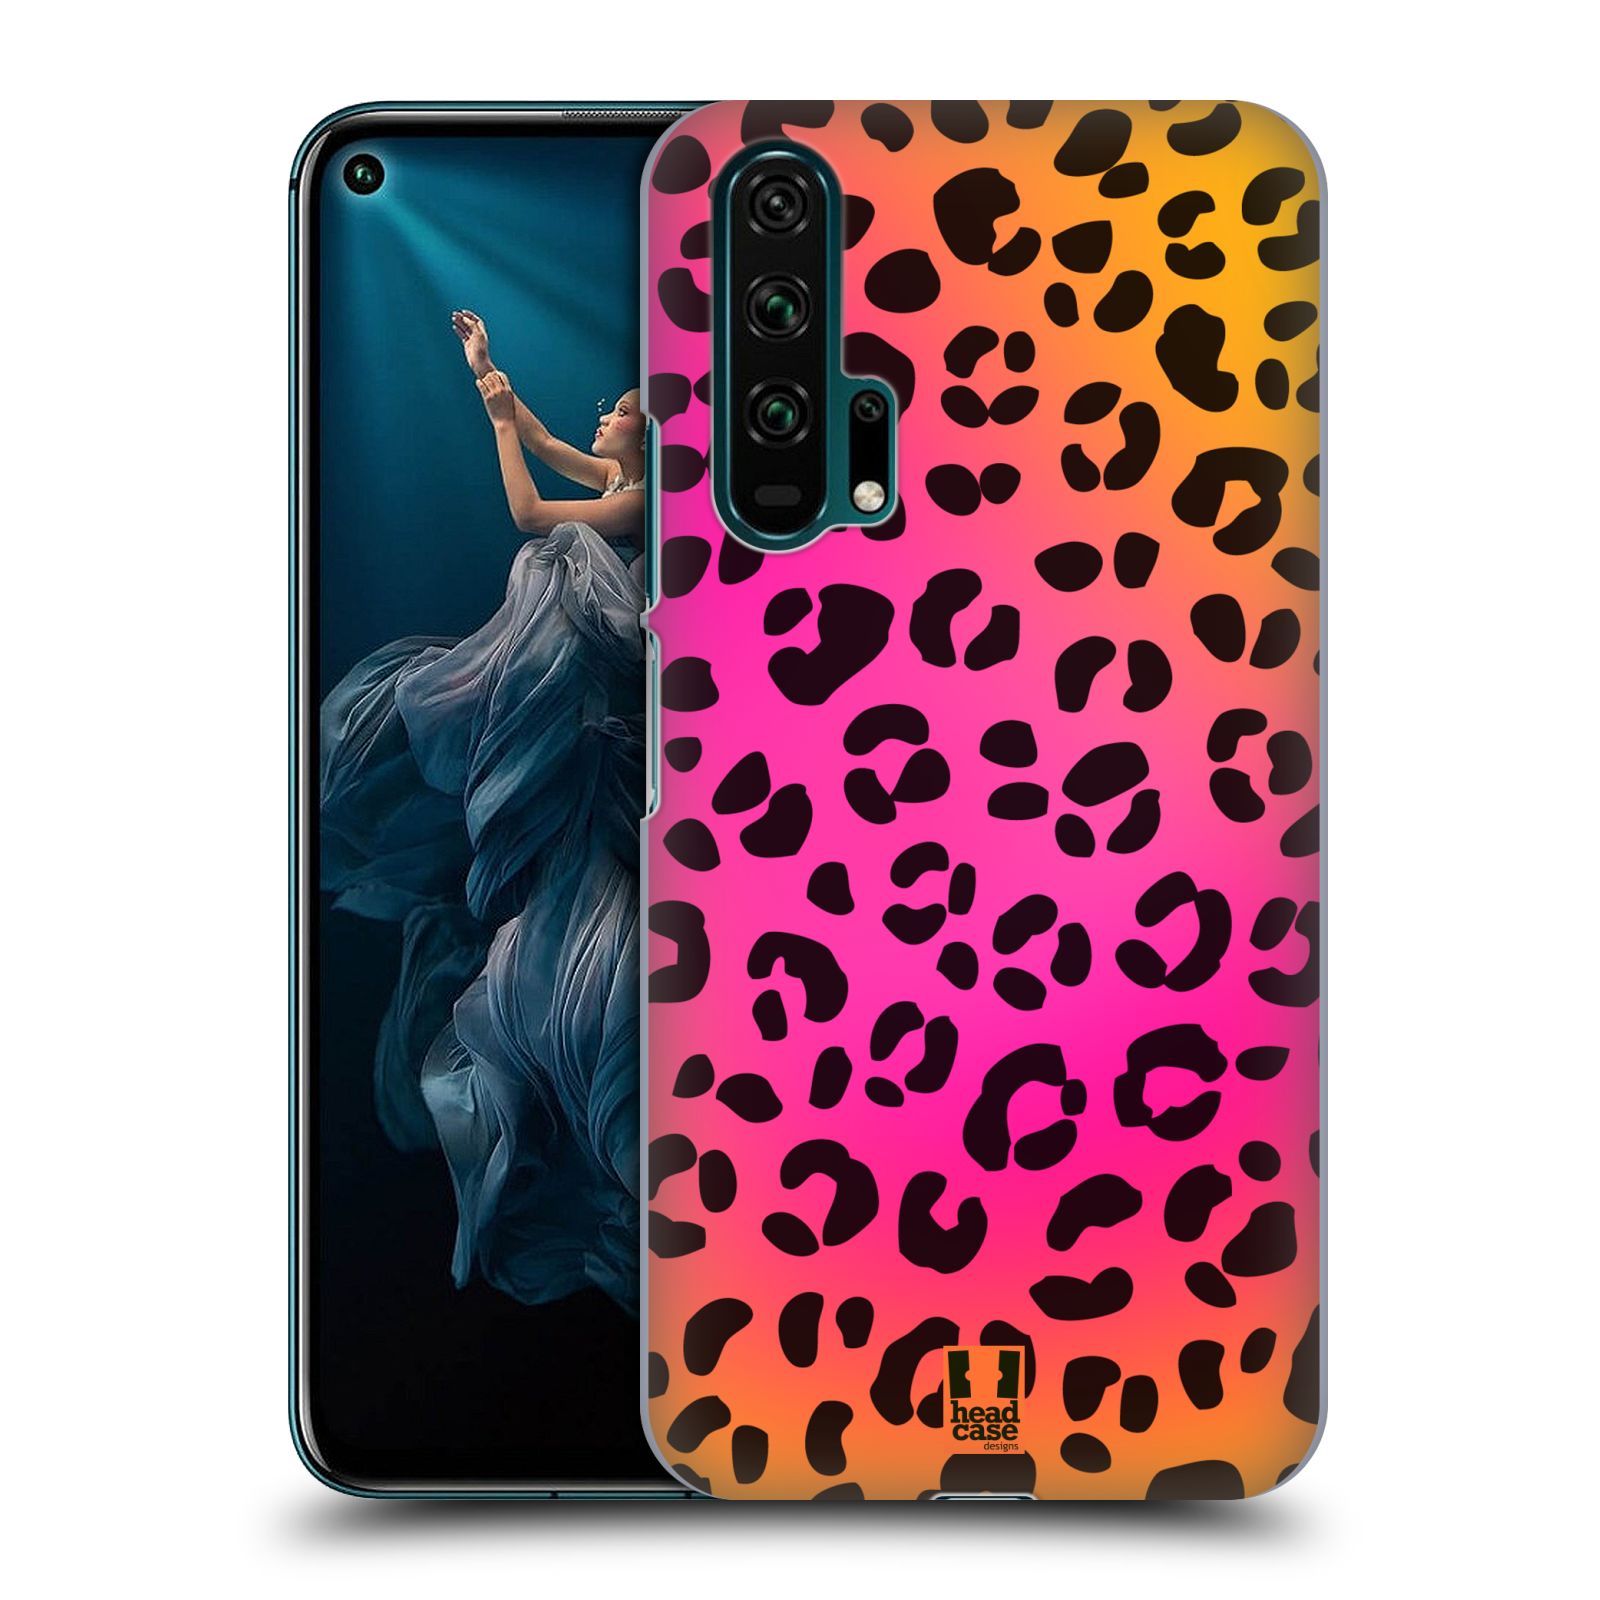 Pouzdro na mobil Honor 20 PRO - HEAD CASE - vzor Divočina zvíře růžový leopard